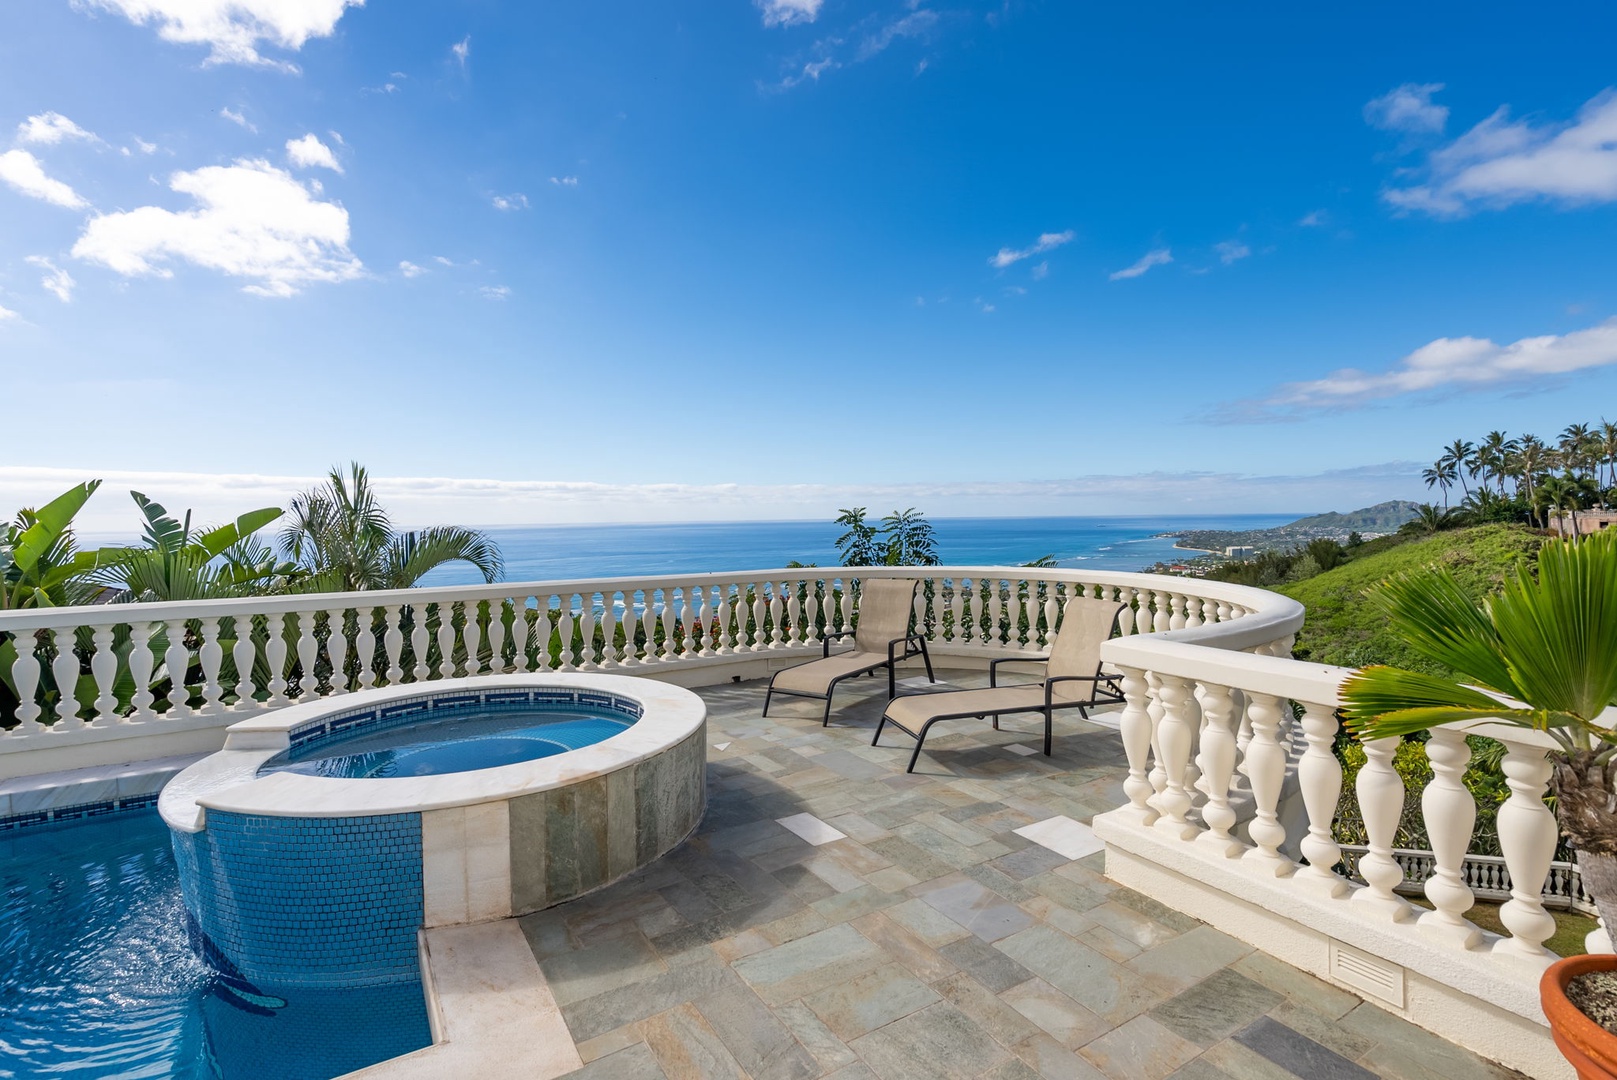 Honolulu Vacation Rentals, Hawaii Ridge Getaway - Spa pool on the roof deck with poolside loungers.